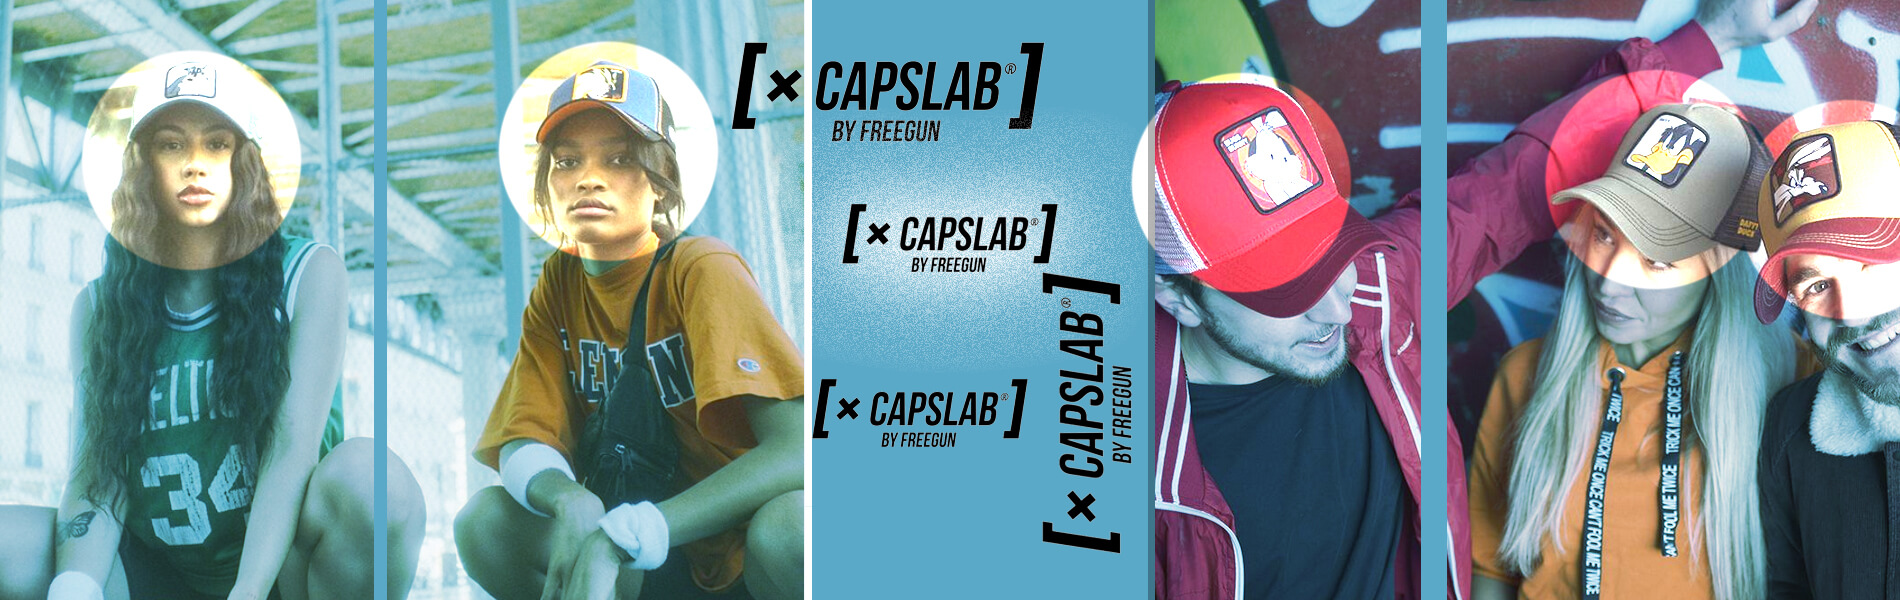 marque capslab 2